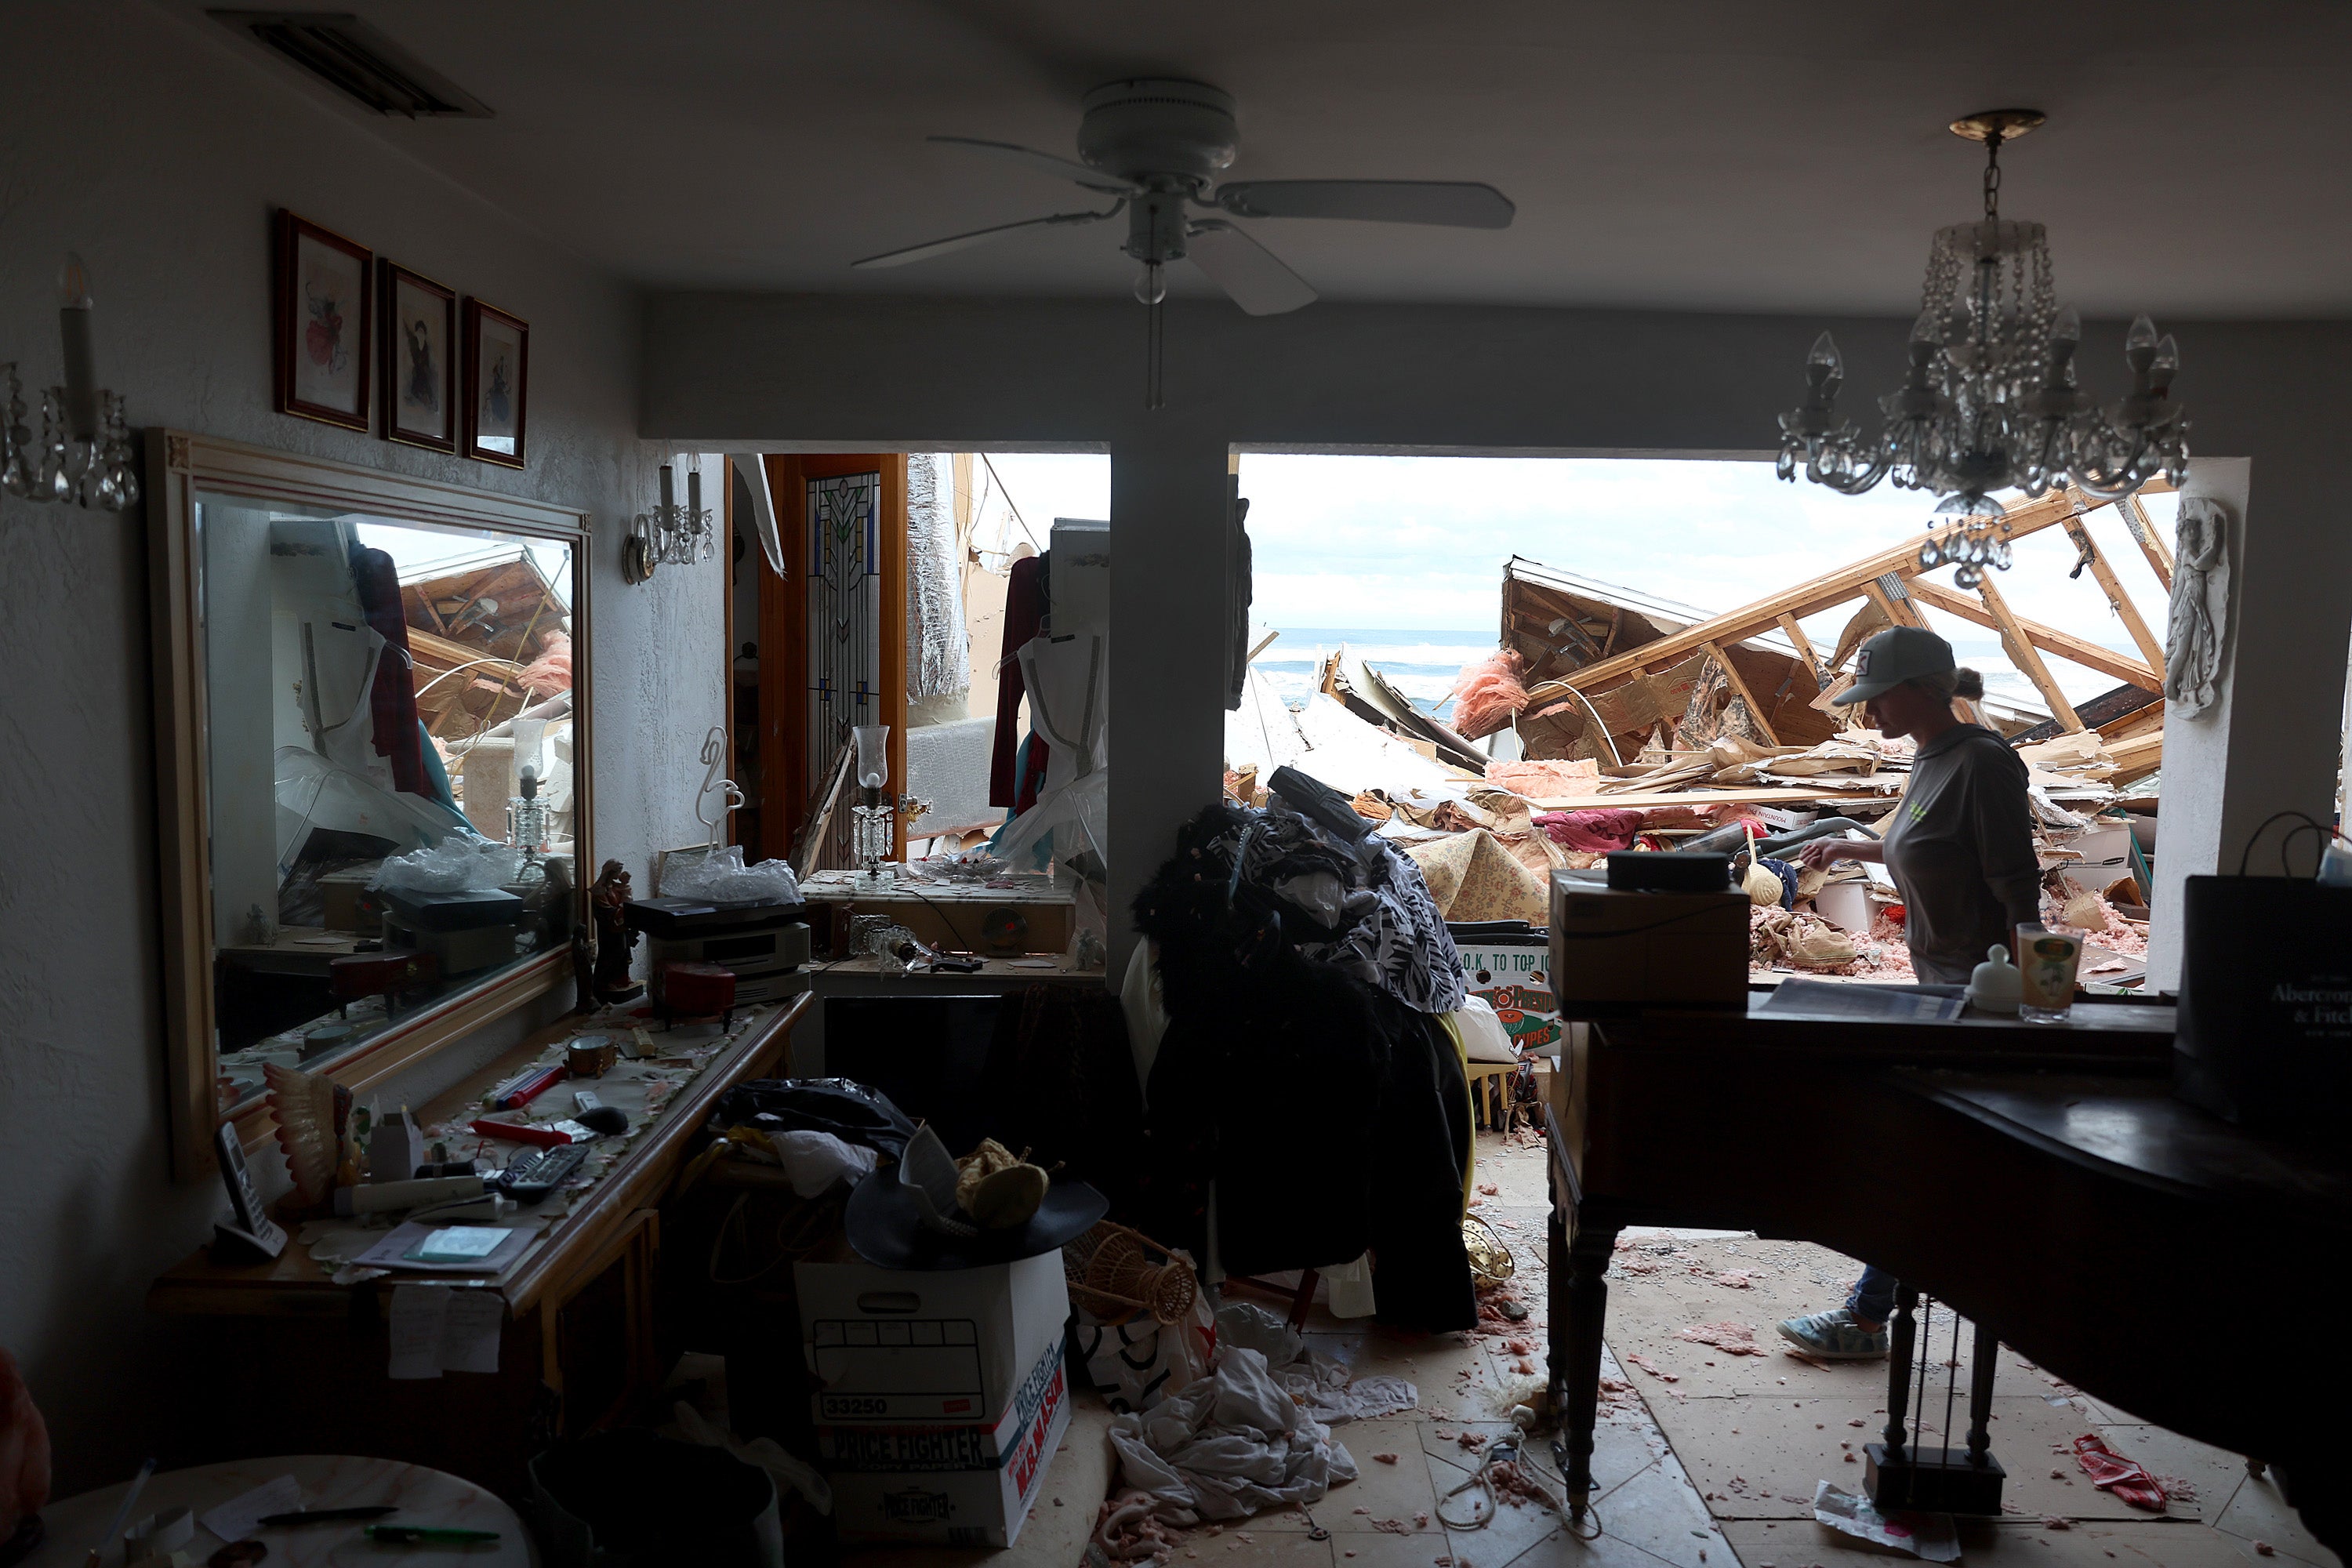 Photos and Videos Show Hurricane Nicole’s Destruction in Florida